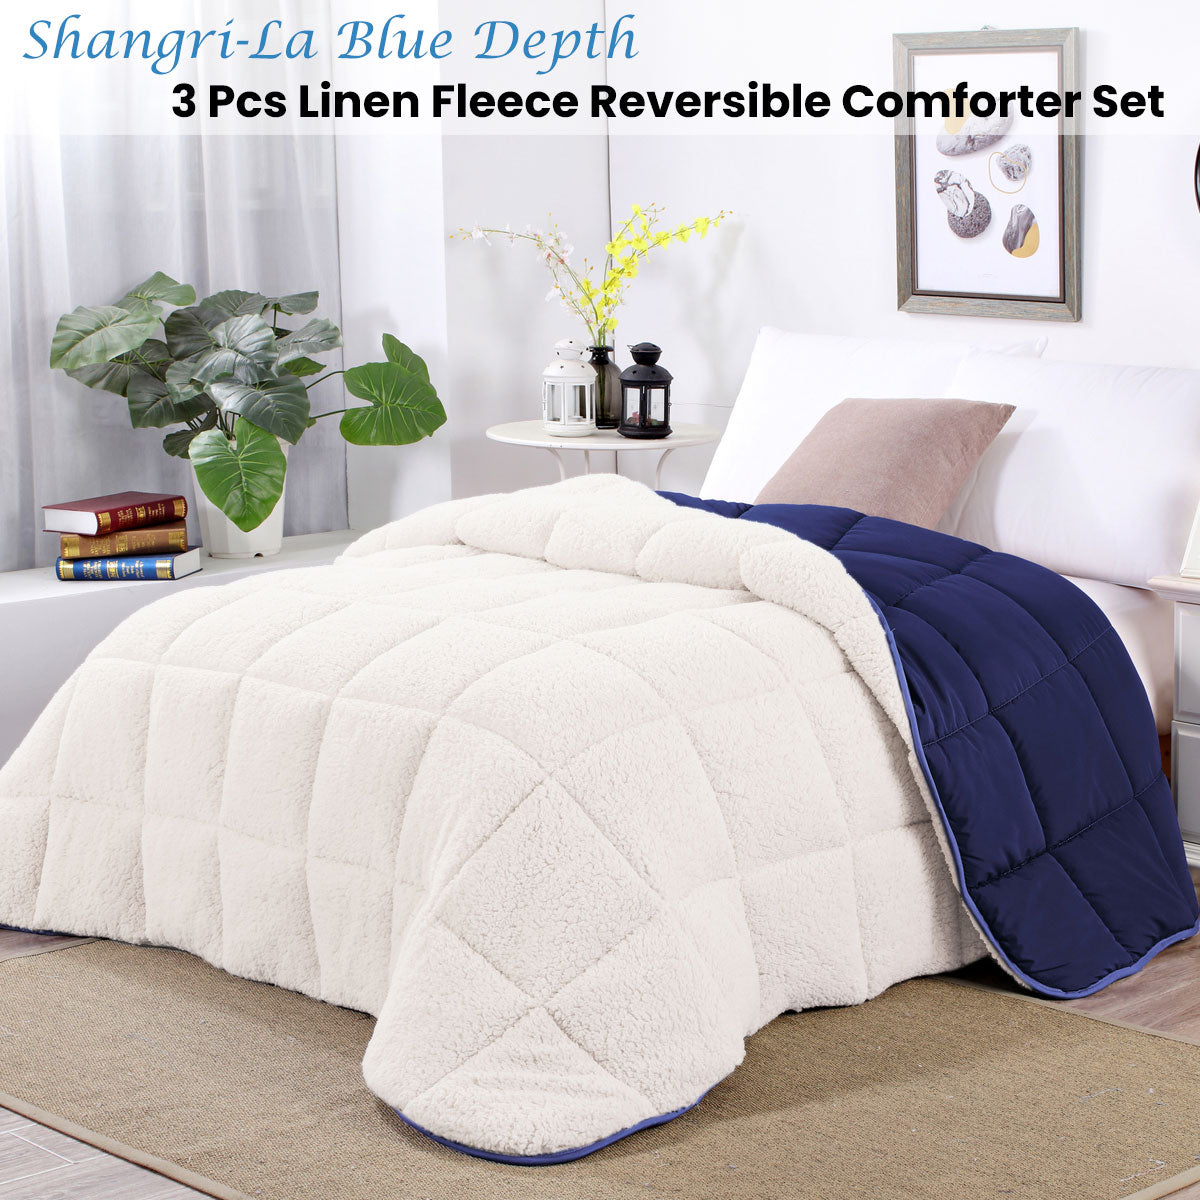 Double Shangri La Blue Depth Sherpa Fleece Reversible 3 Pcs Comforter Set - White/Blue